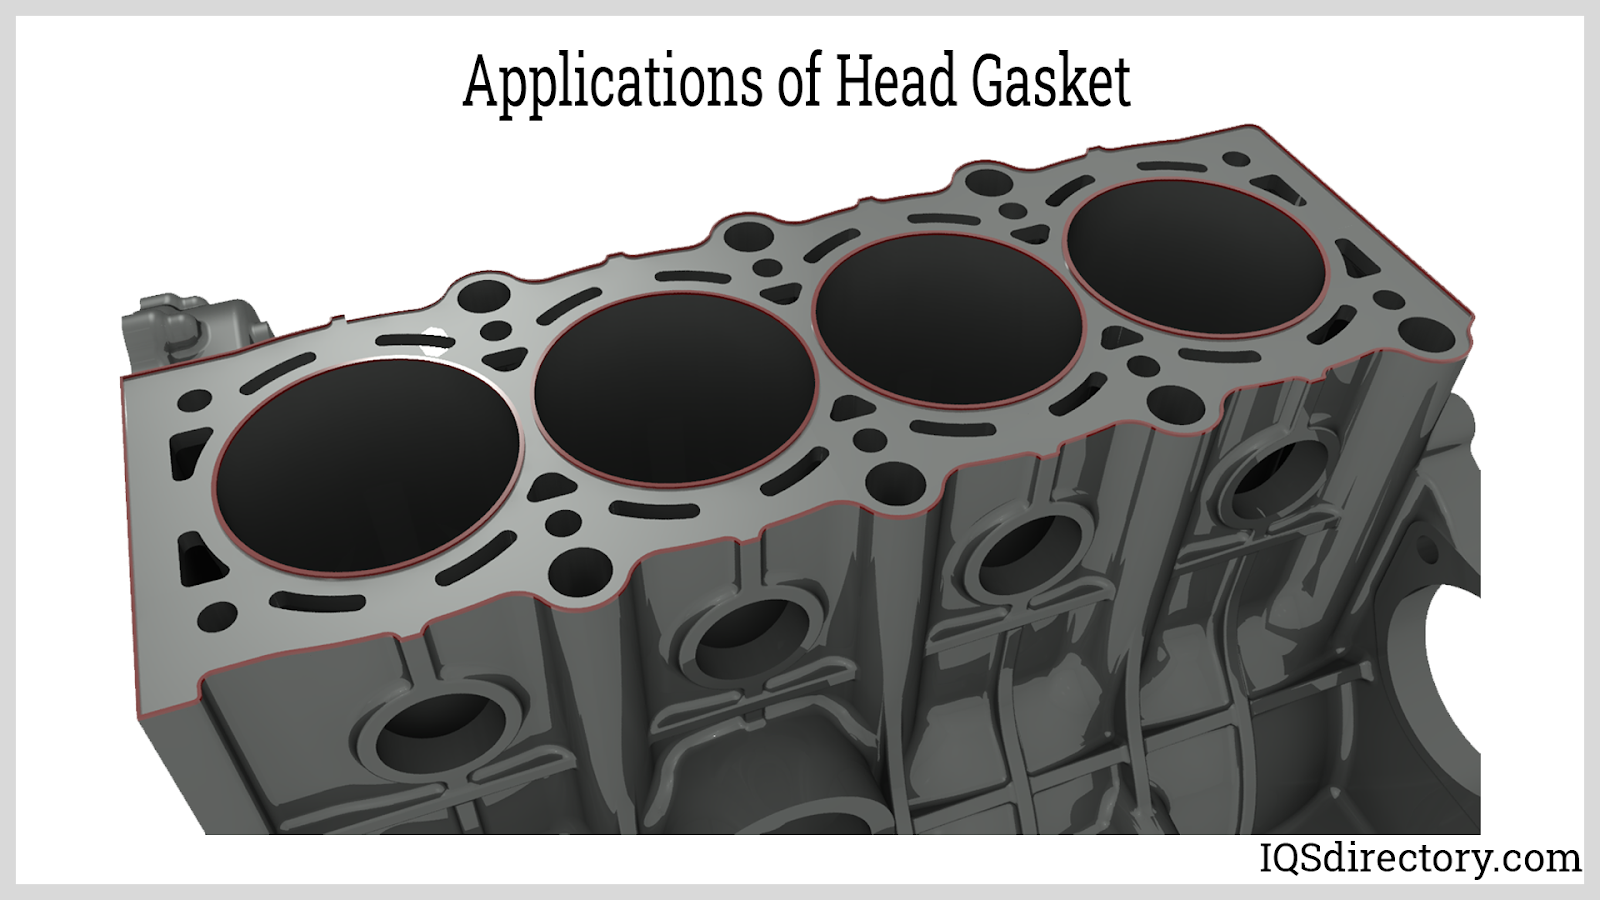 Applications of Head Gasket